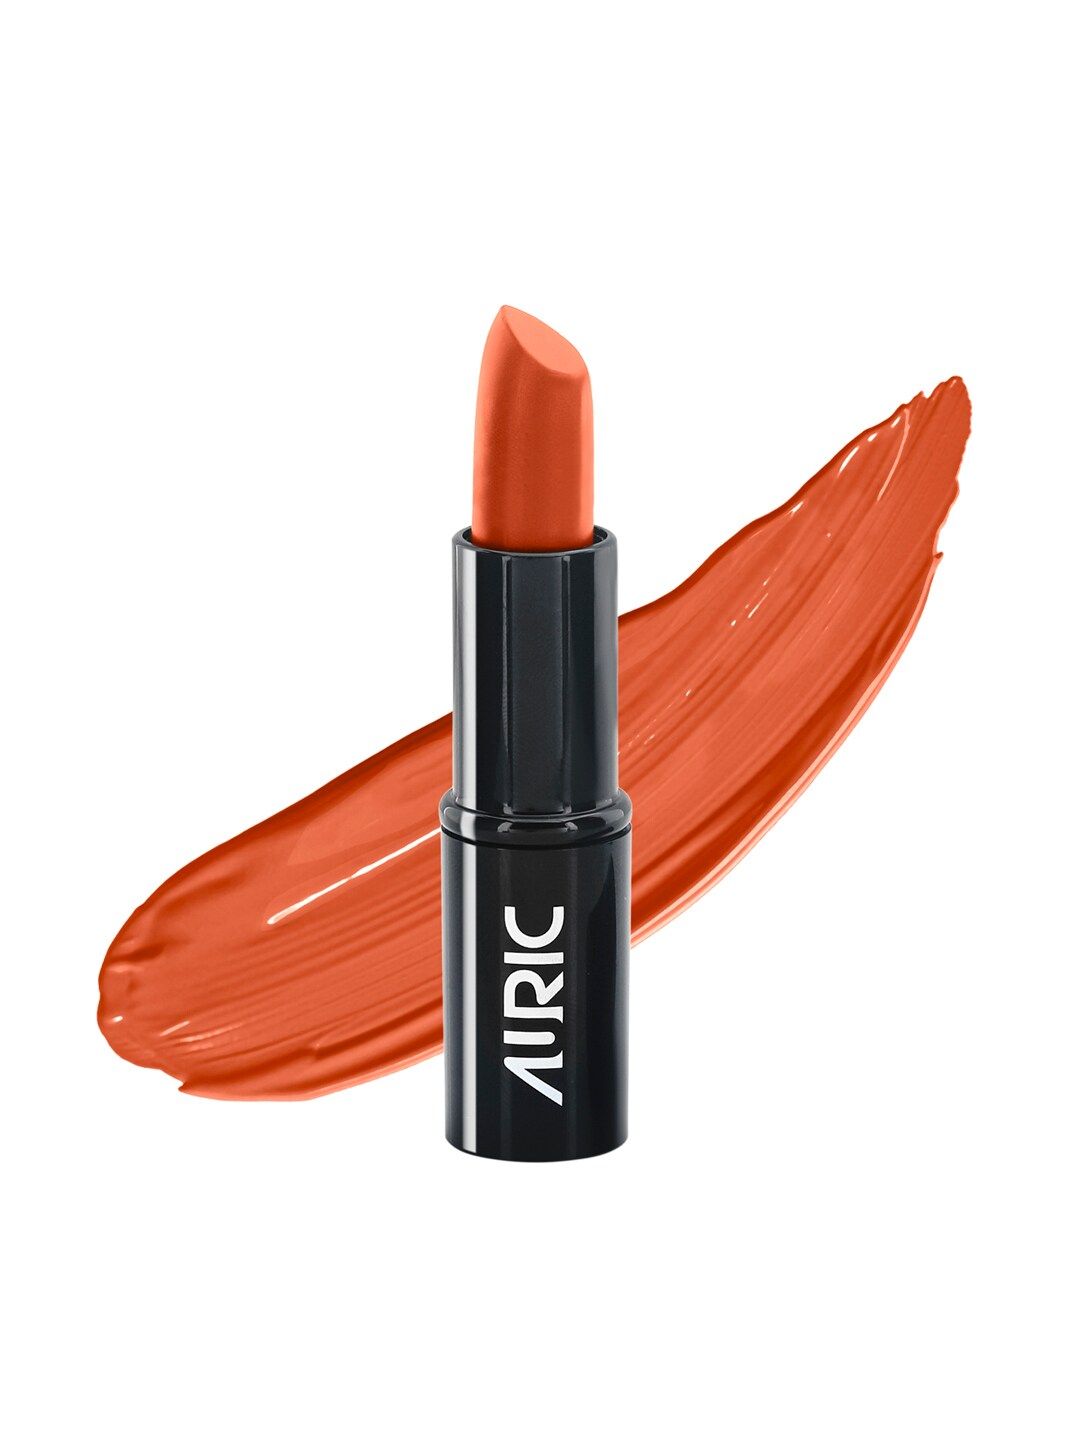 AURIC MoistureLock Lipstick Toasted Almond 3102 4 g Price in India